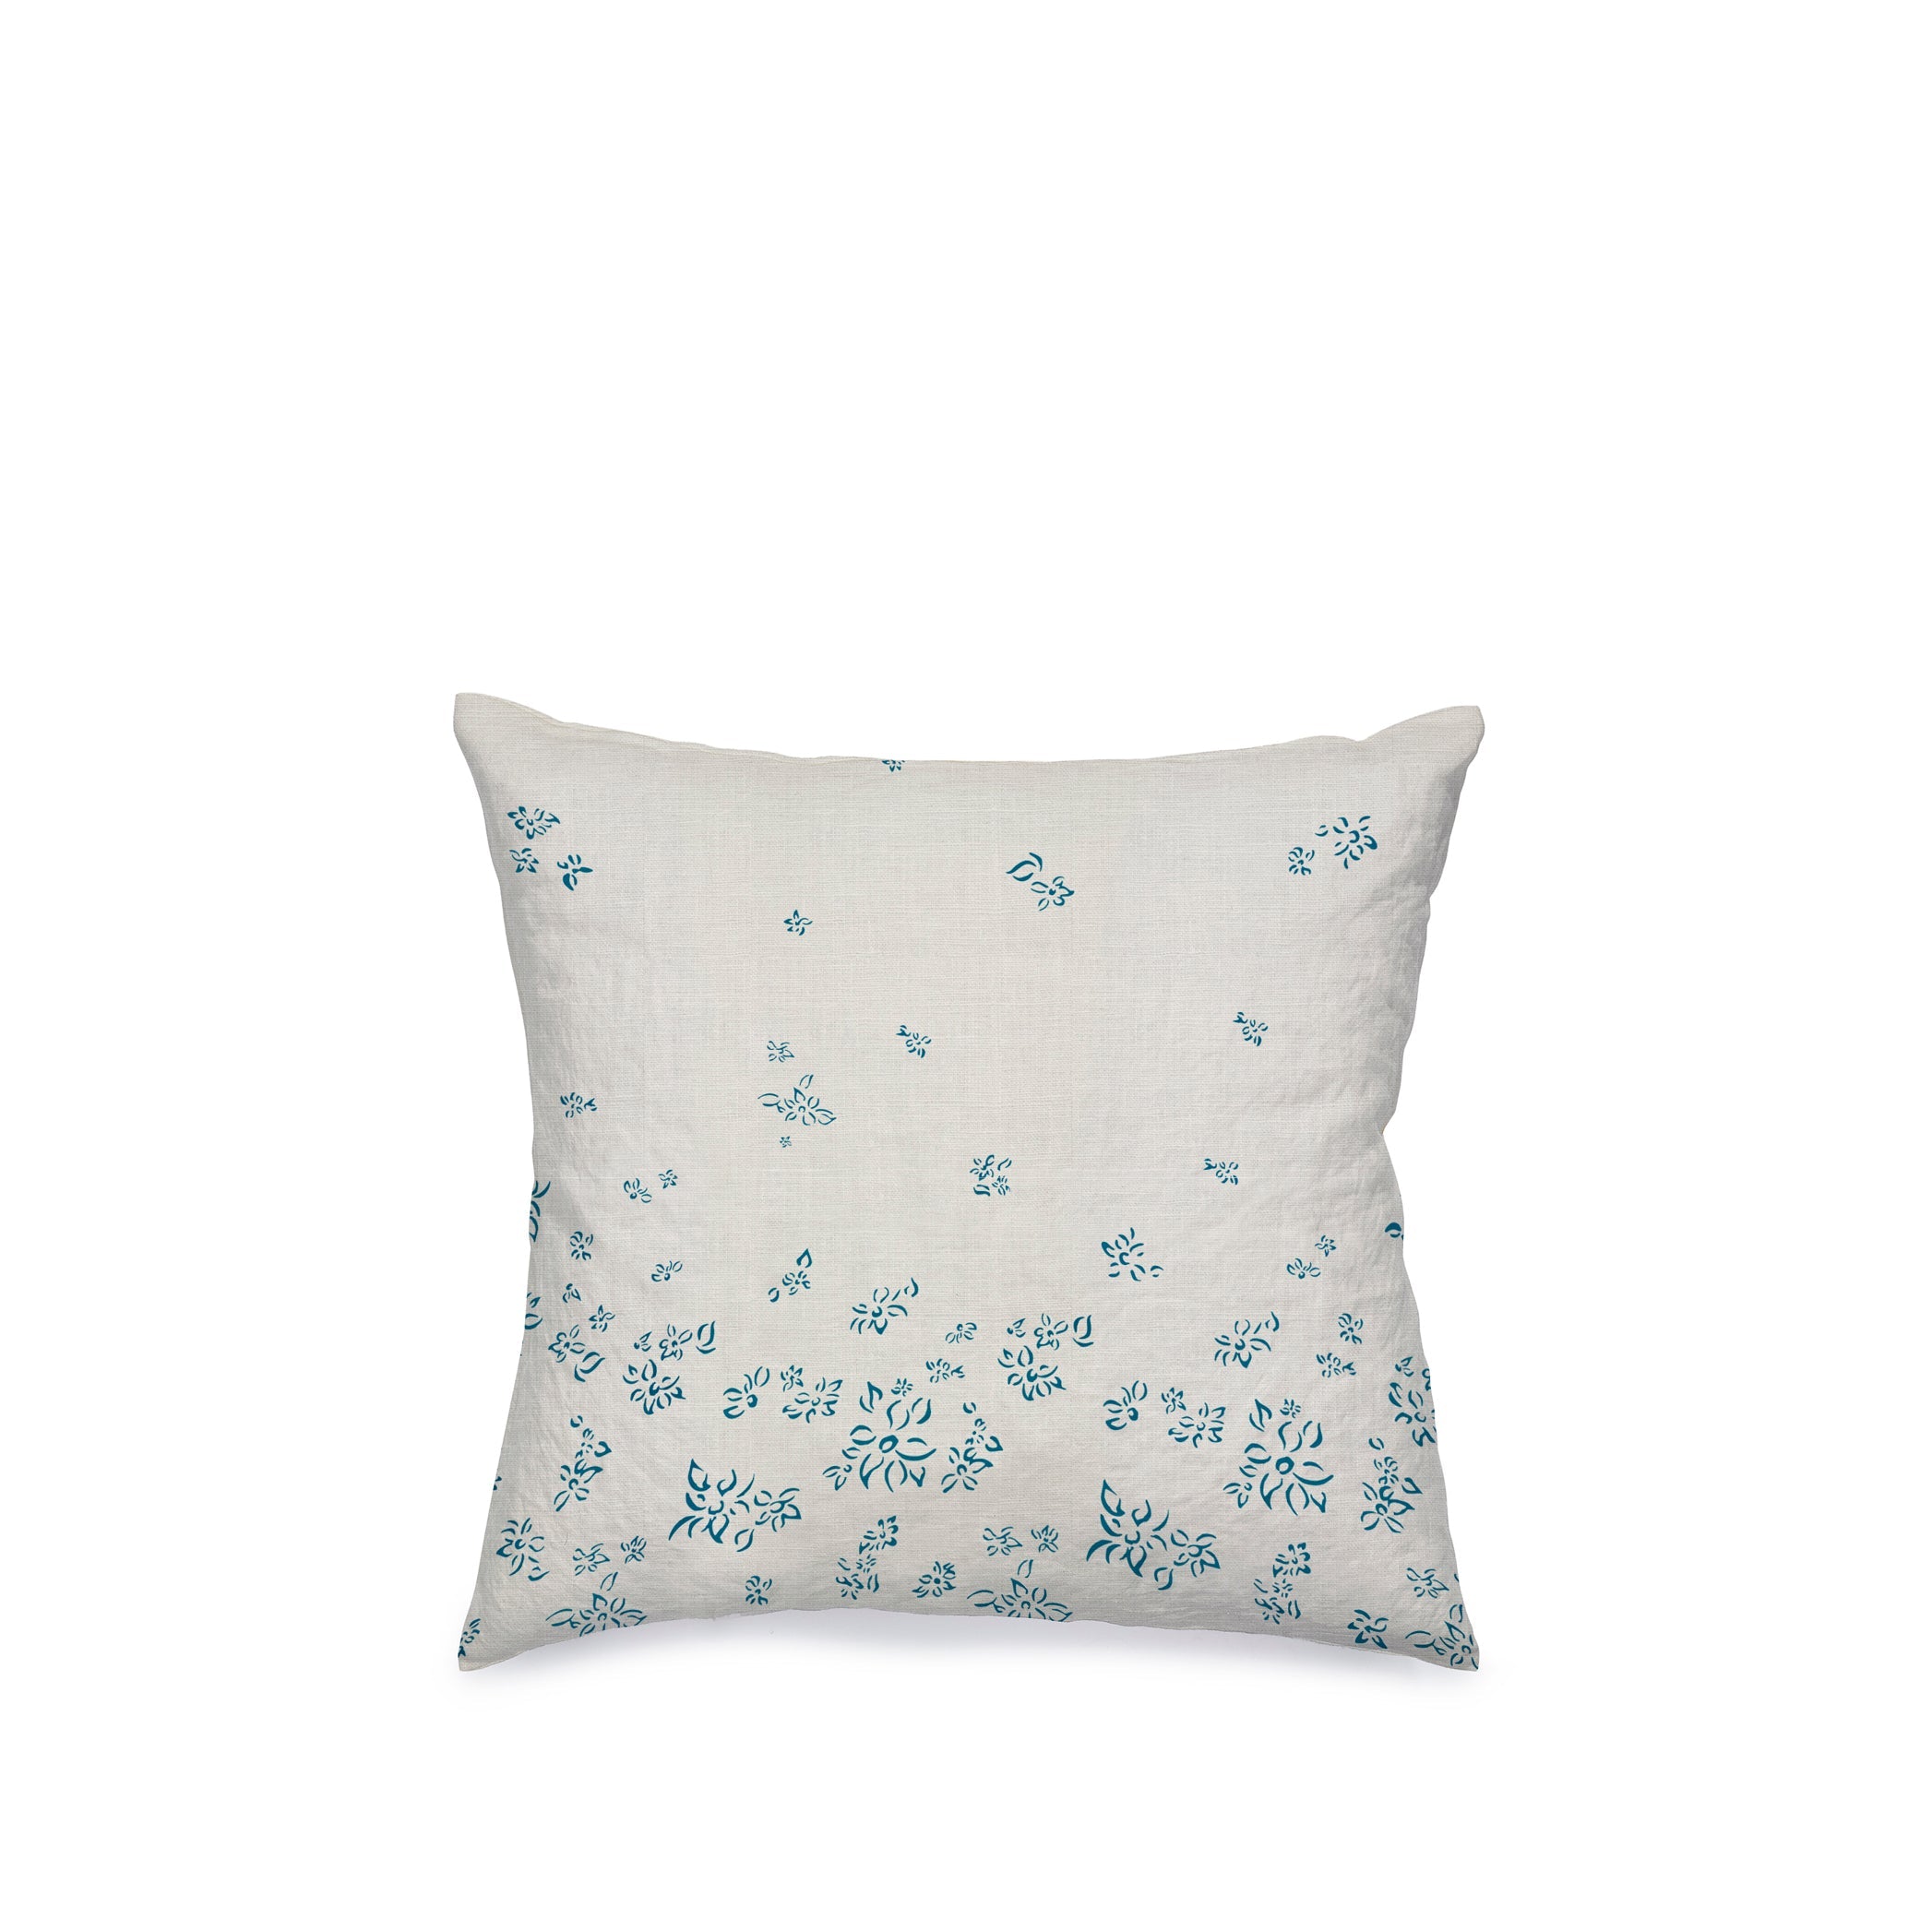 Heavy Linen Falling Flower Cushion in Blue on White, 50cm x 50cm